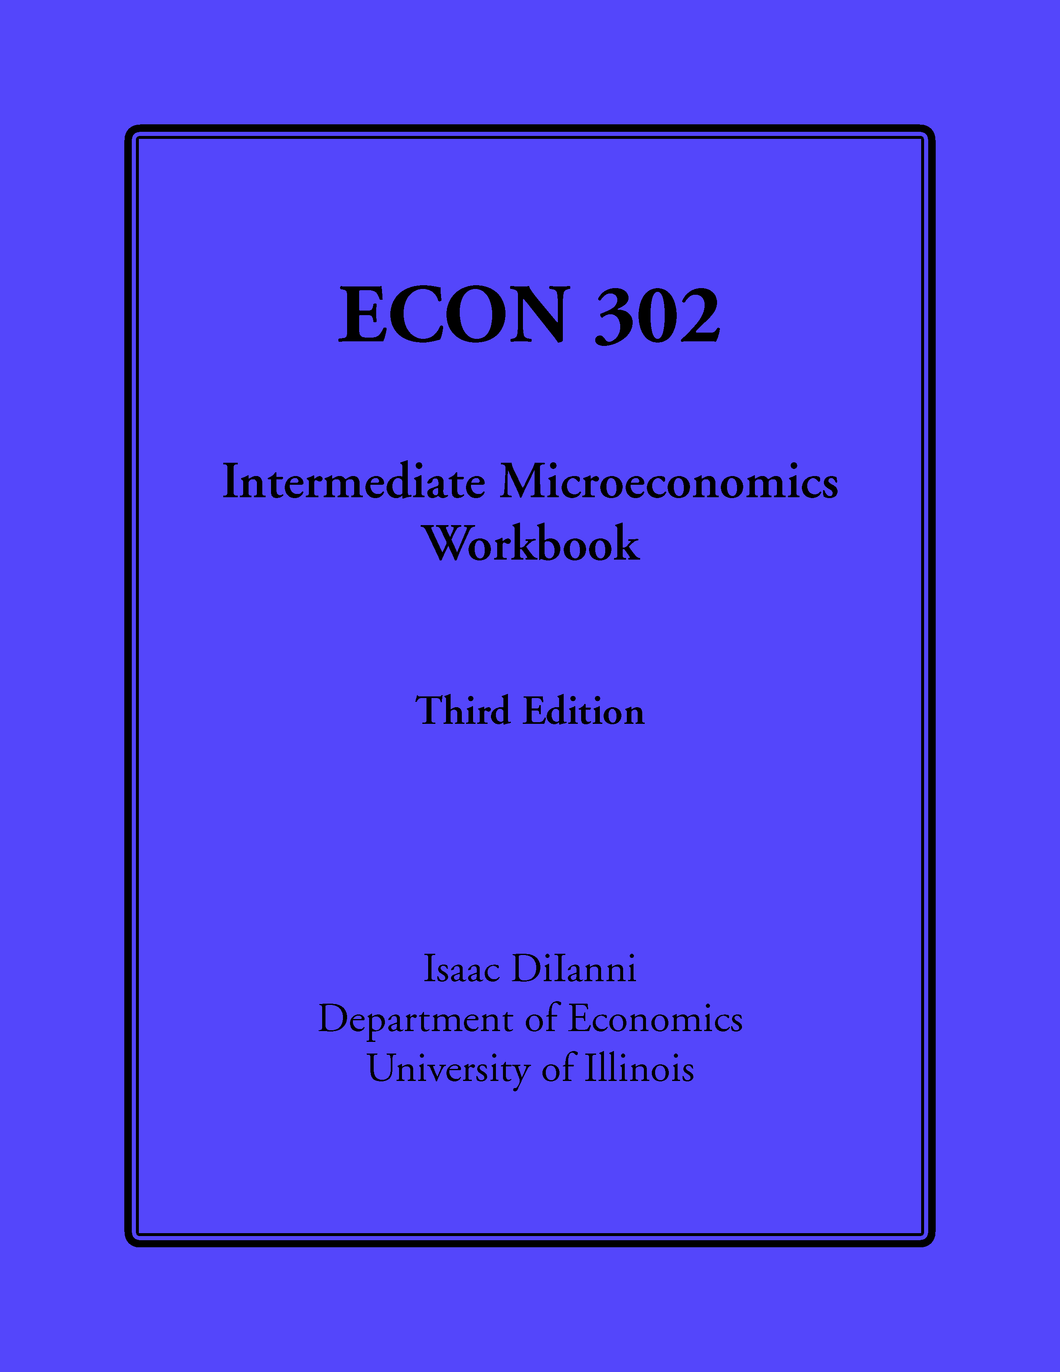 UIUC ECON 302 Intermediate Microeconomics Workbook (DiIanni), Fall 2023